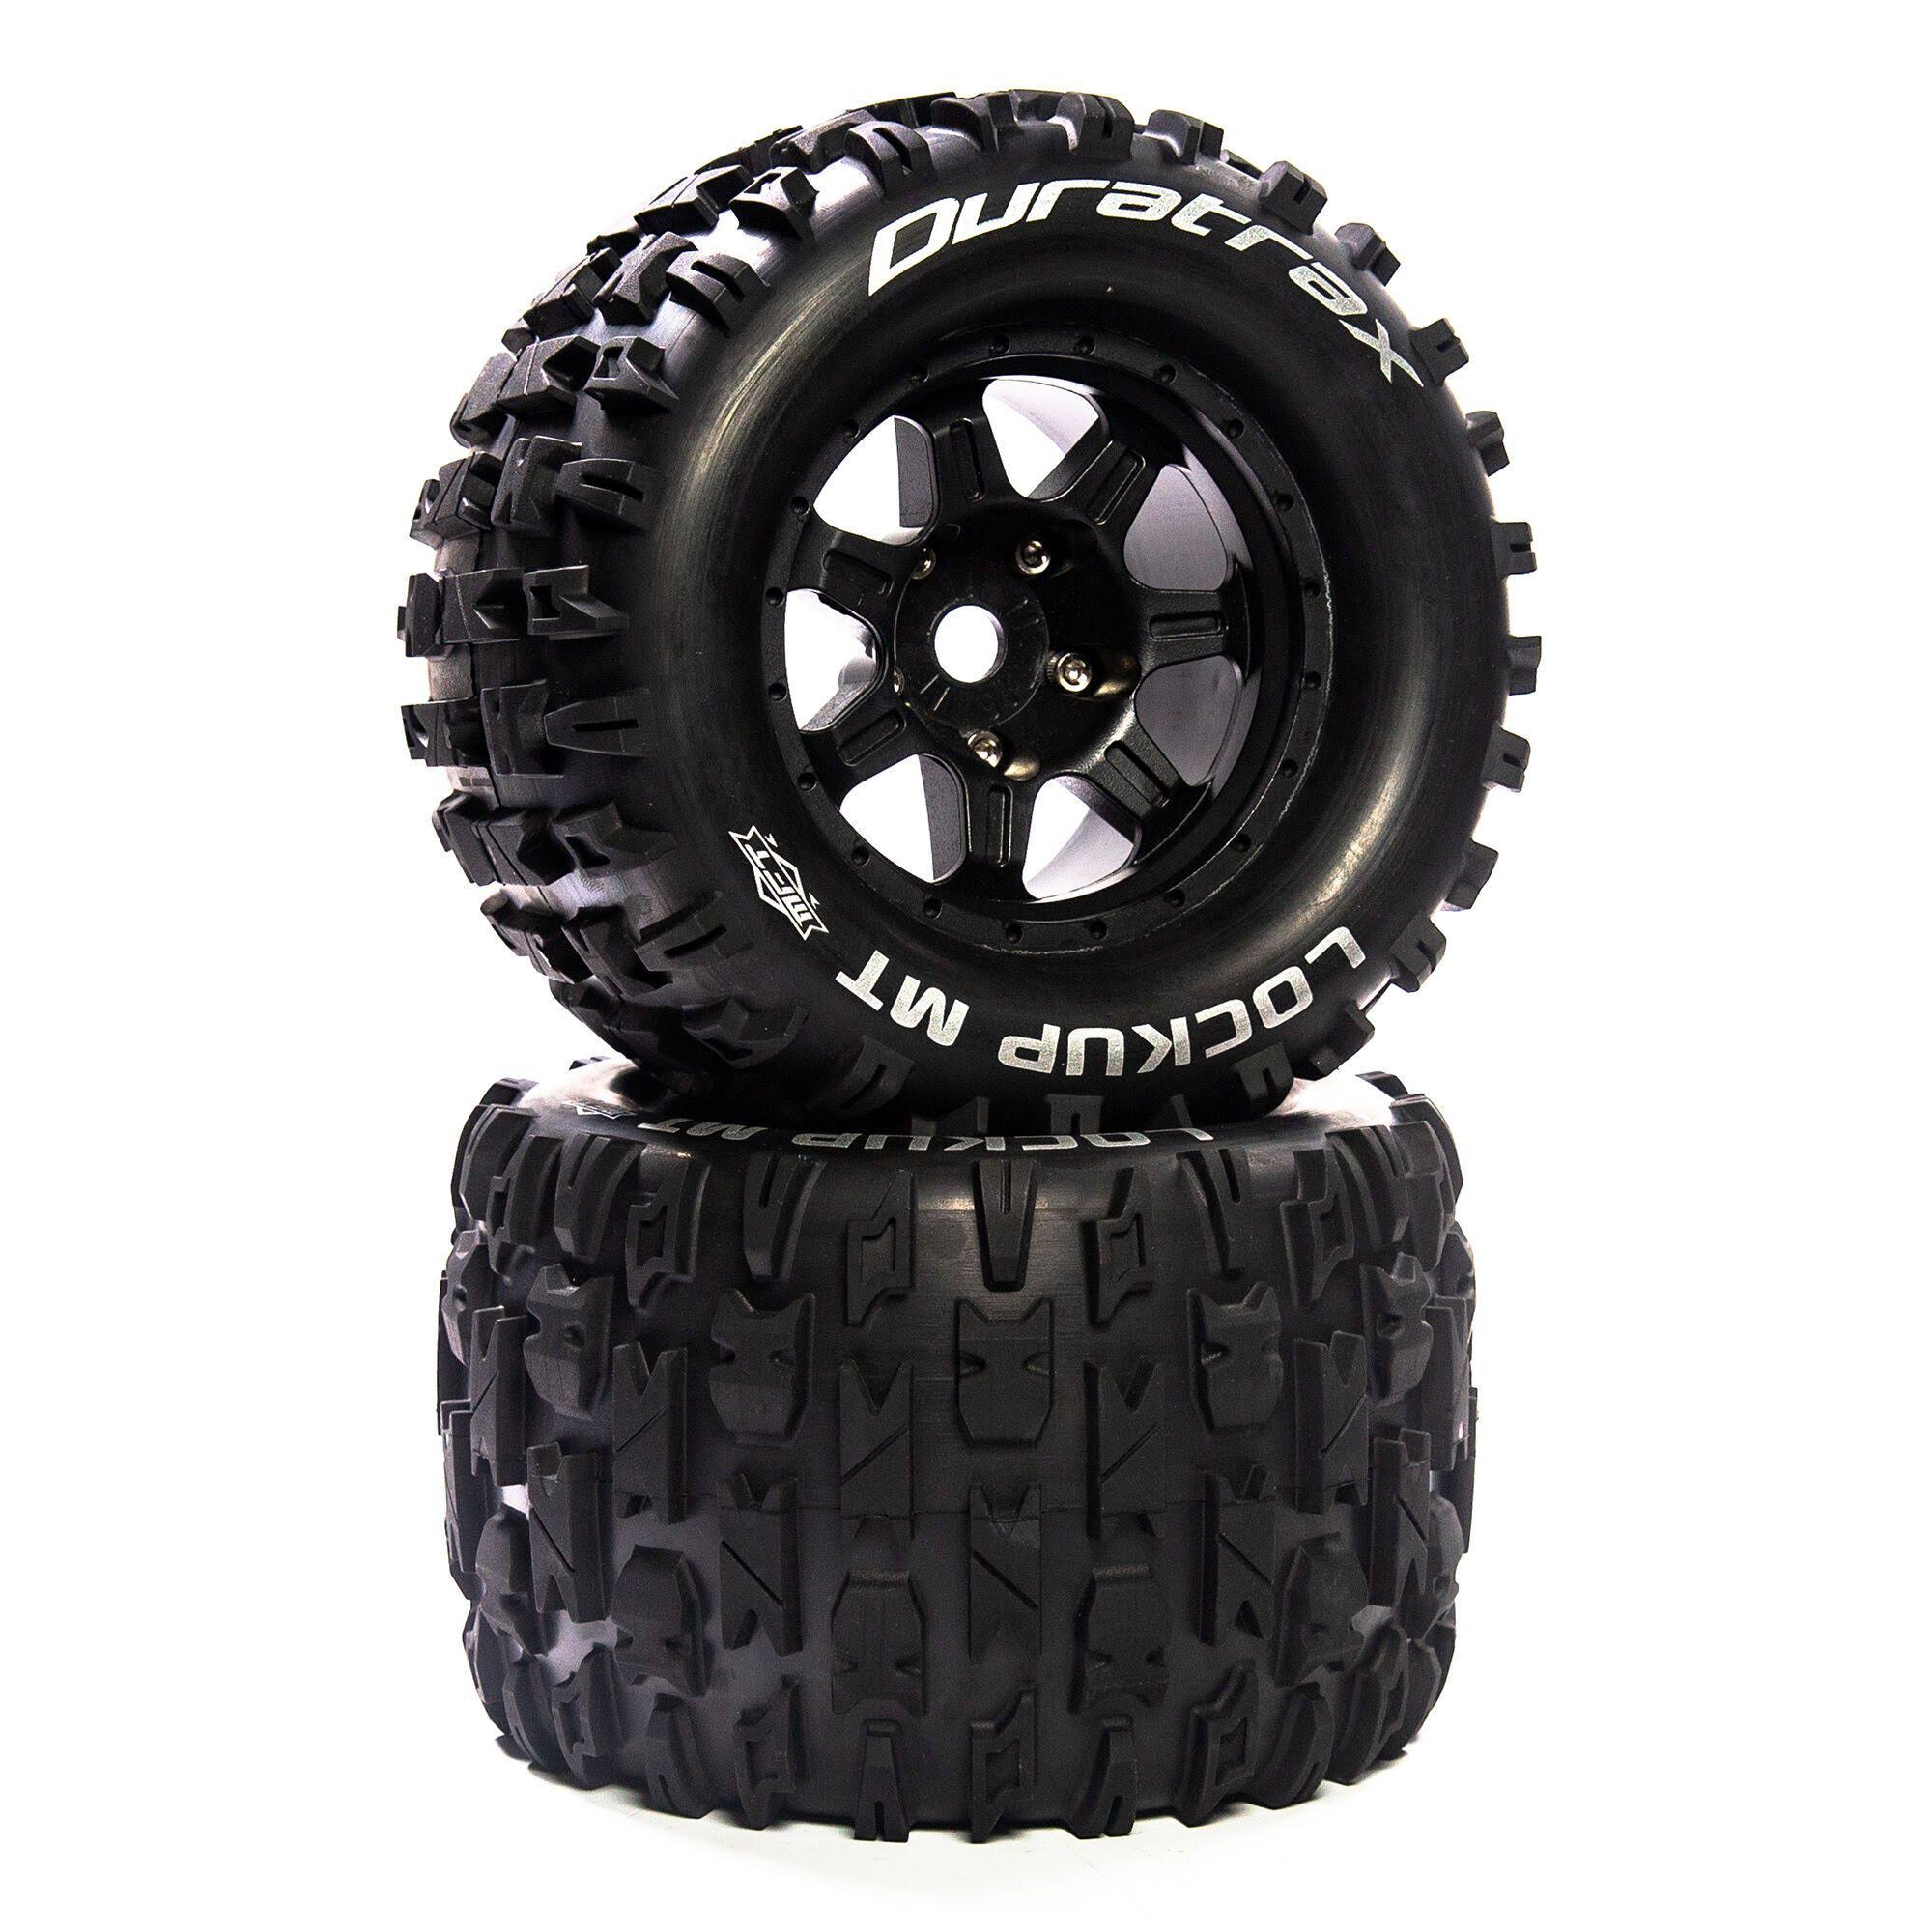 Duratrax Lockup MT Belt 3.8 Mounted Tyres .5 Offset Black 17mm Hex, 2pcs Car Tyres/Wheels RC Car